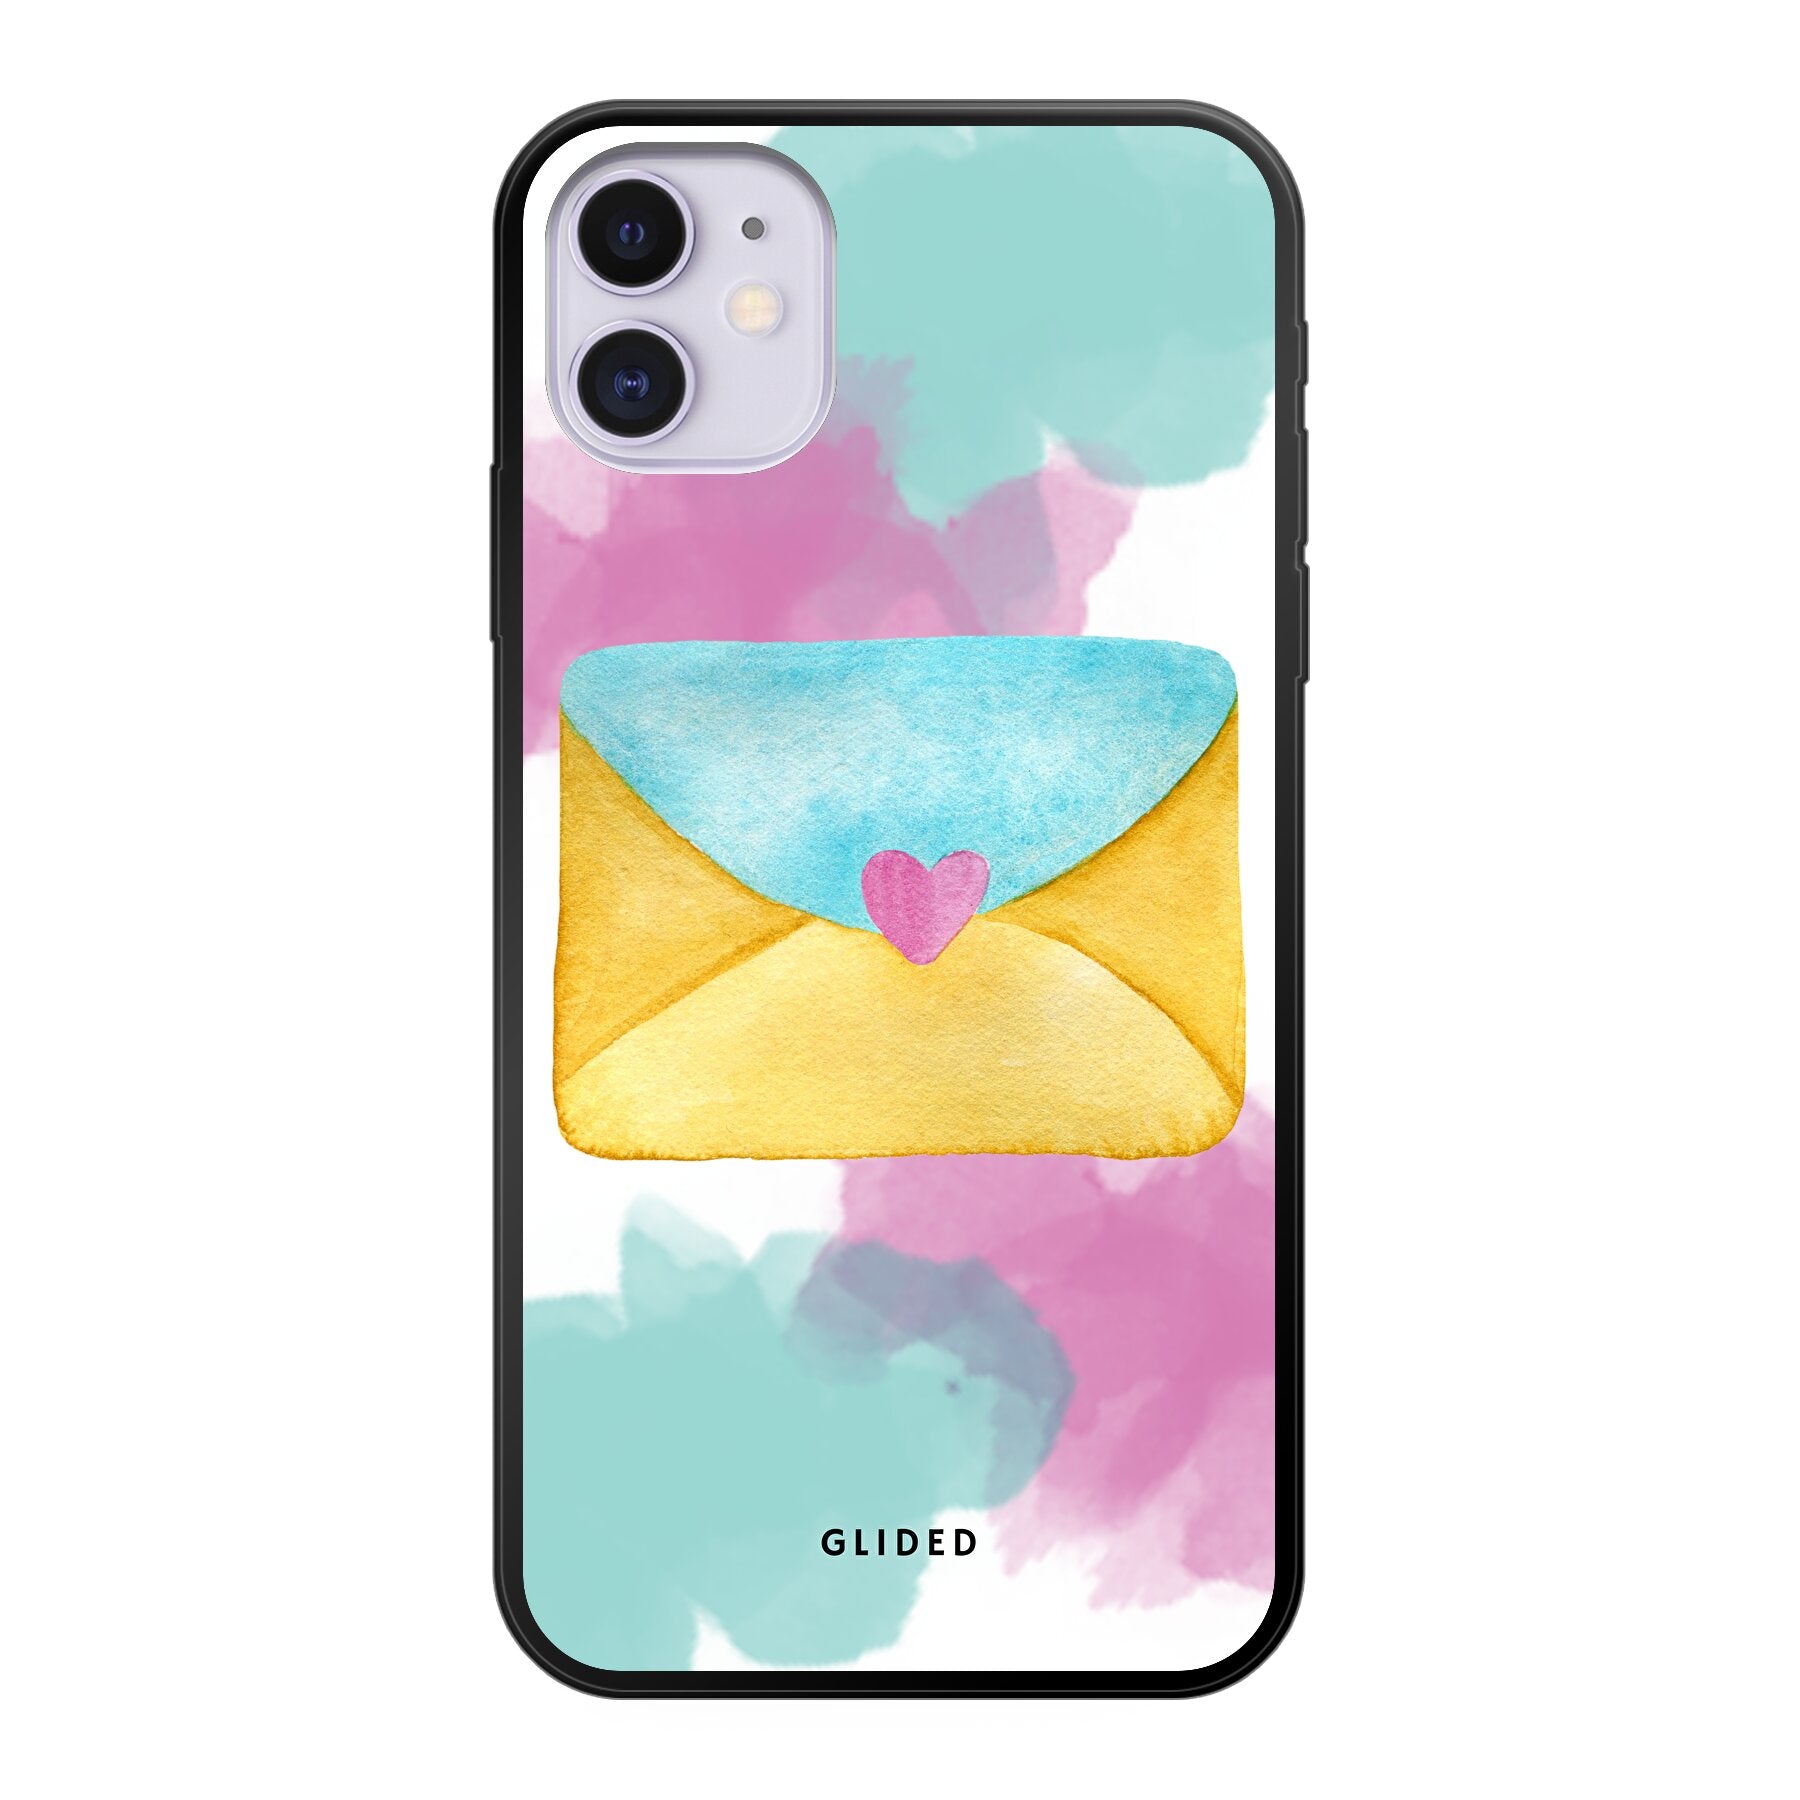 Envelope - iPhone 11 - Soft case